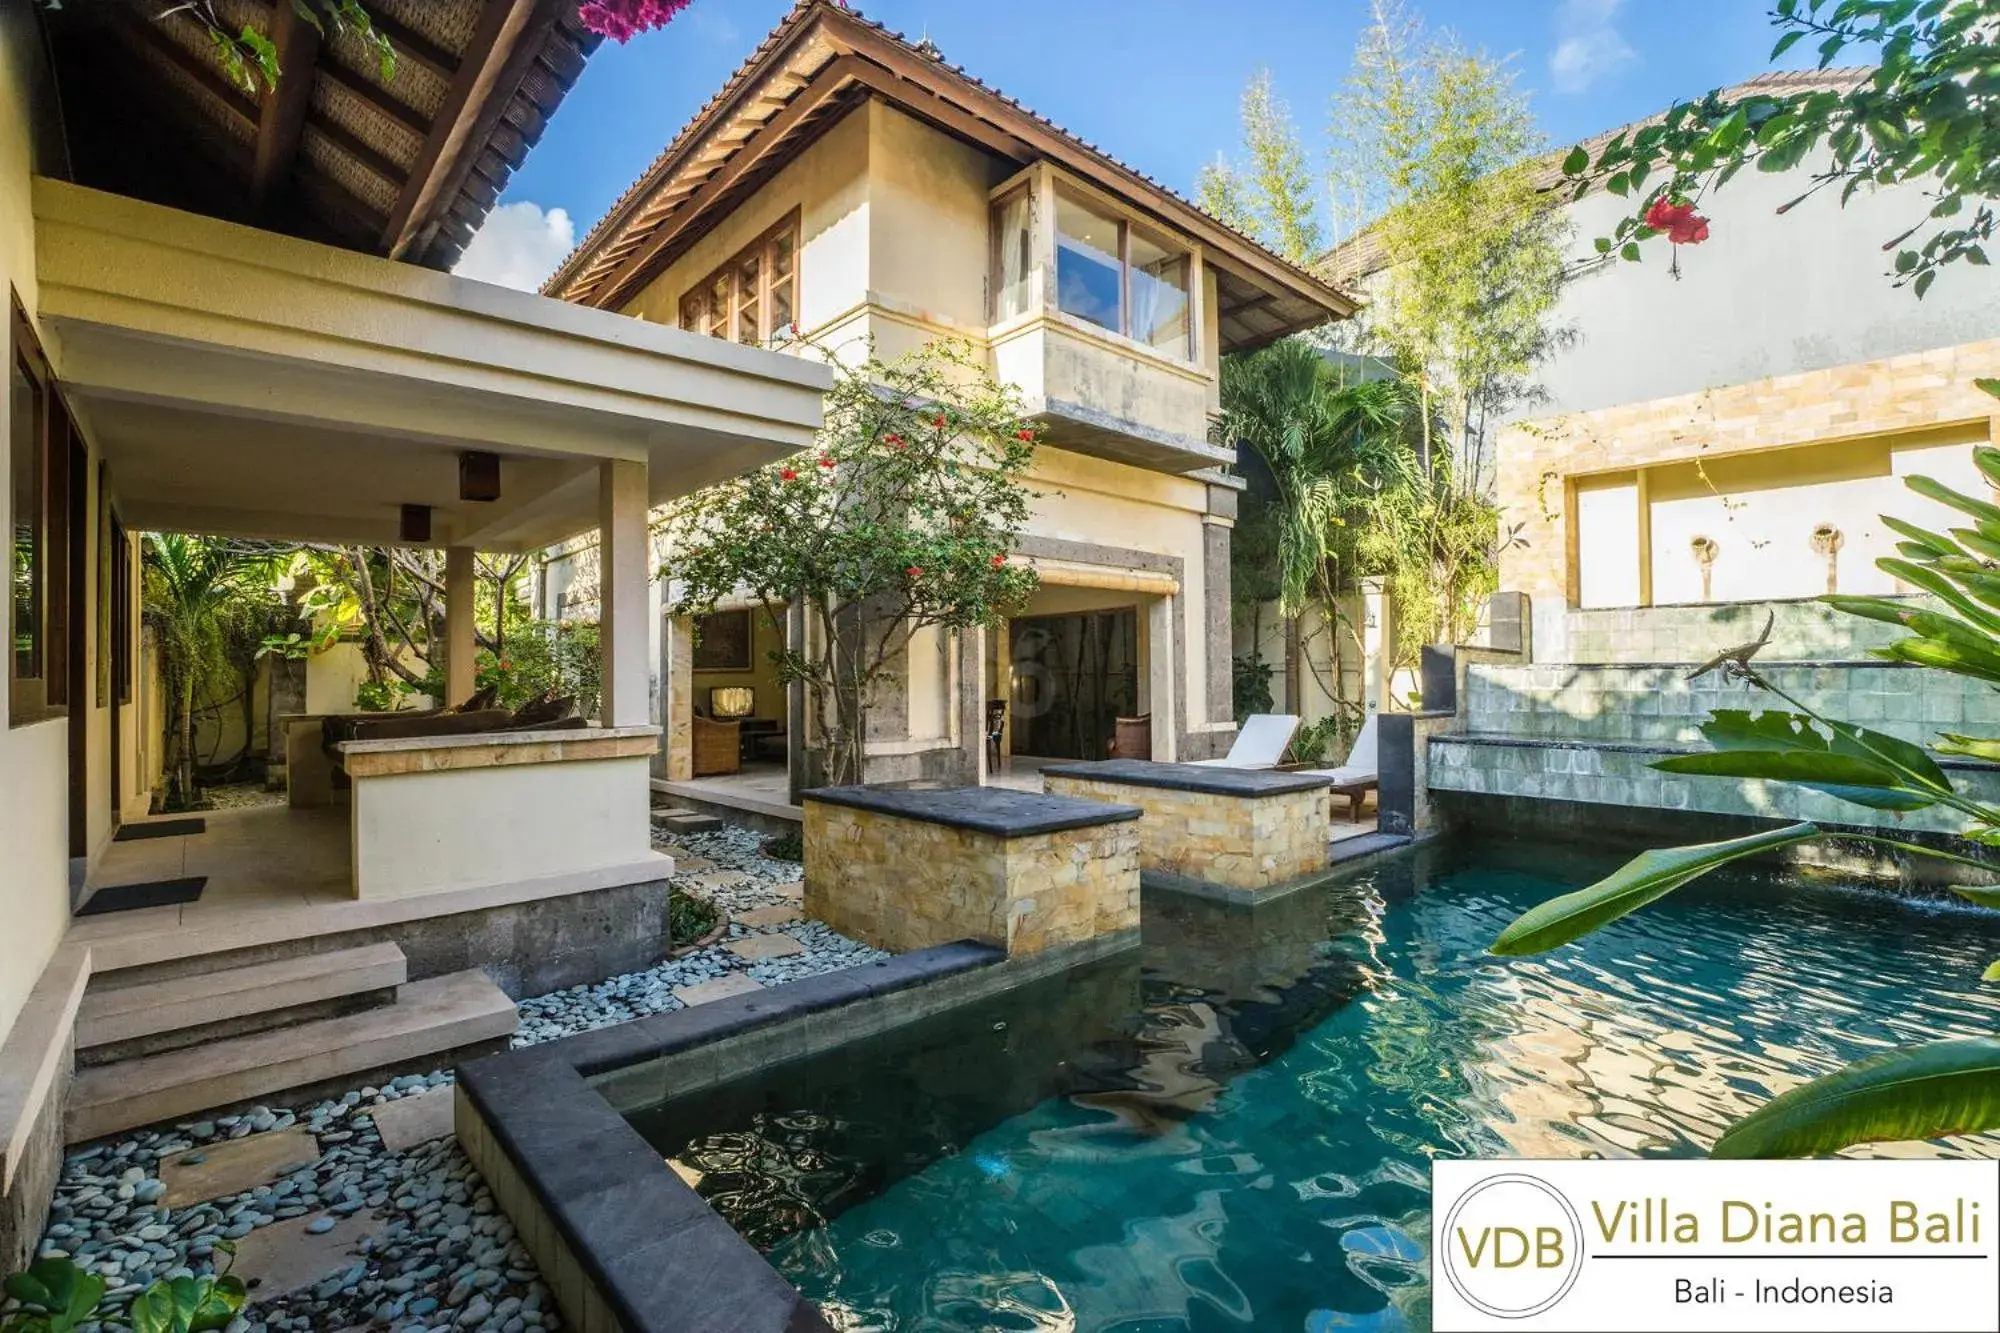 Property building, Swimming Pool in Villa Diana Bali